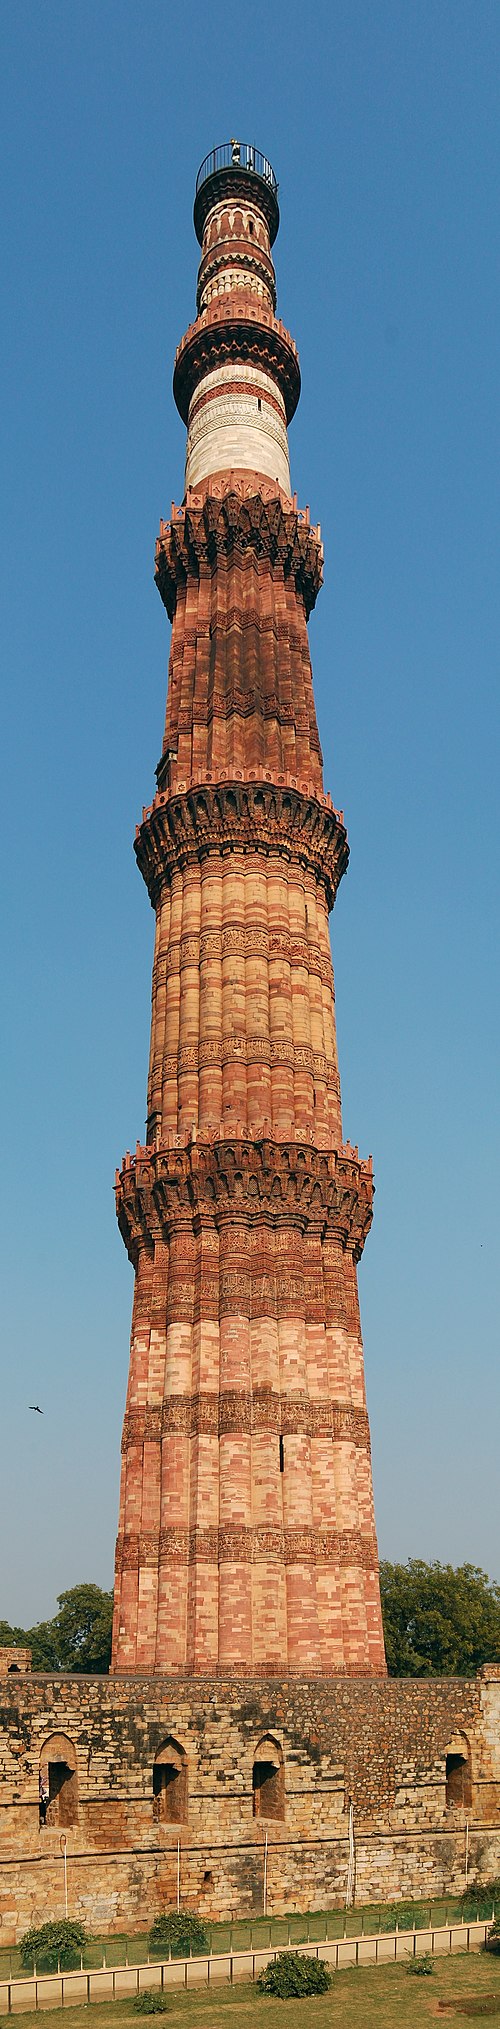 Minar in Delhi, India